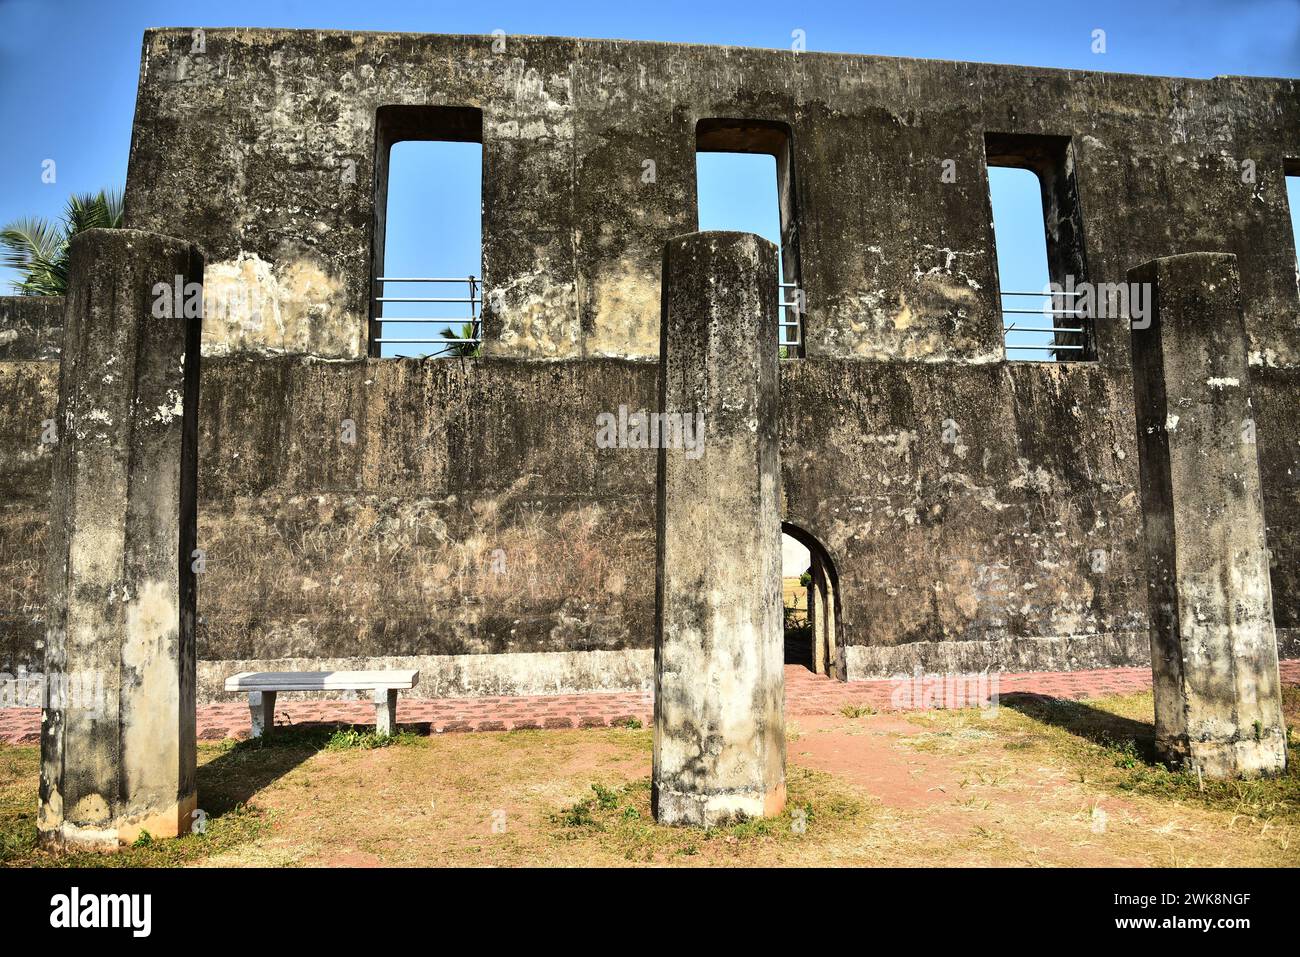 anjengo fort ou anchuthengu fort.trivandrum, kerala, inde. Banque D'Images